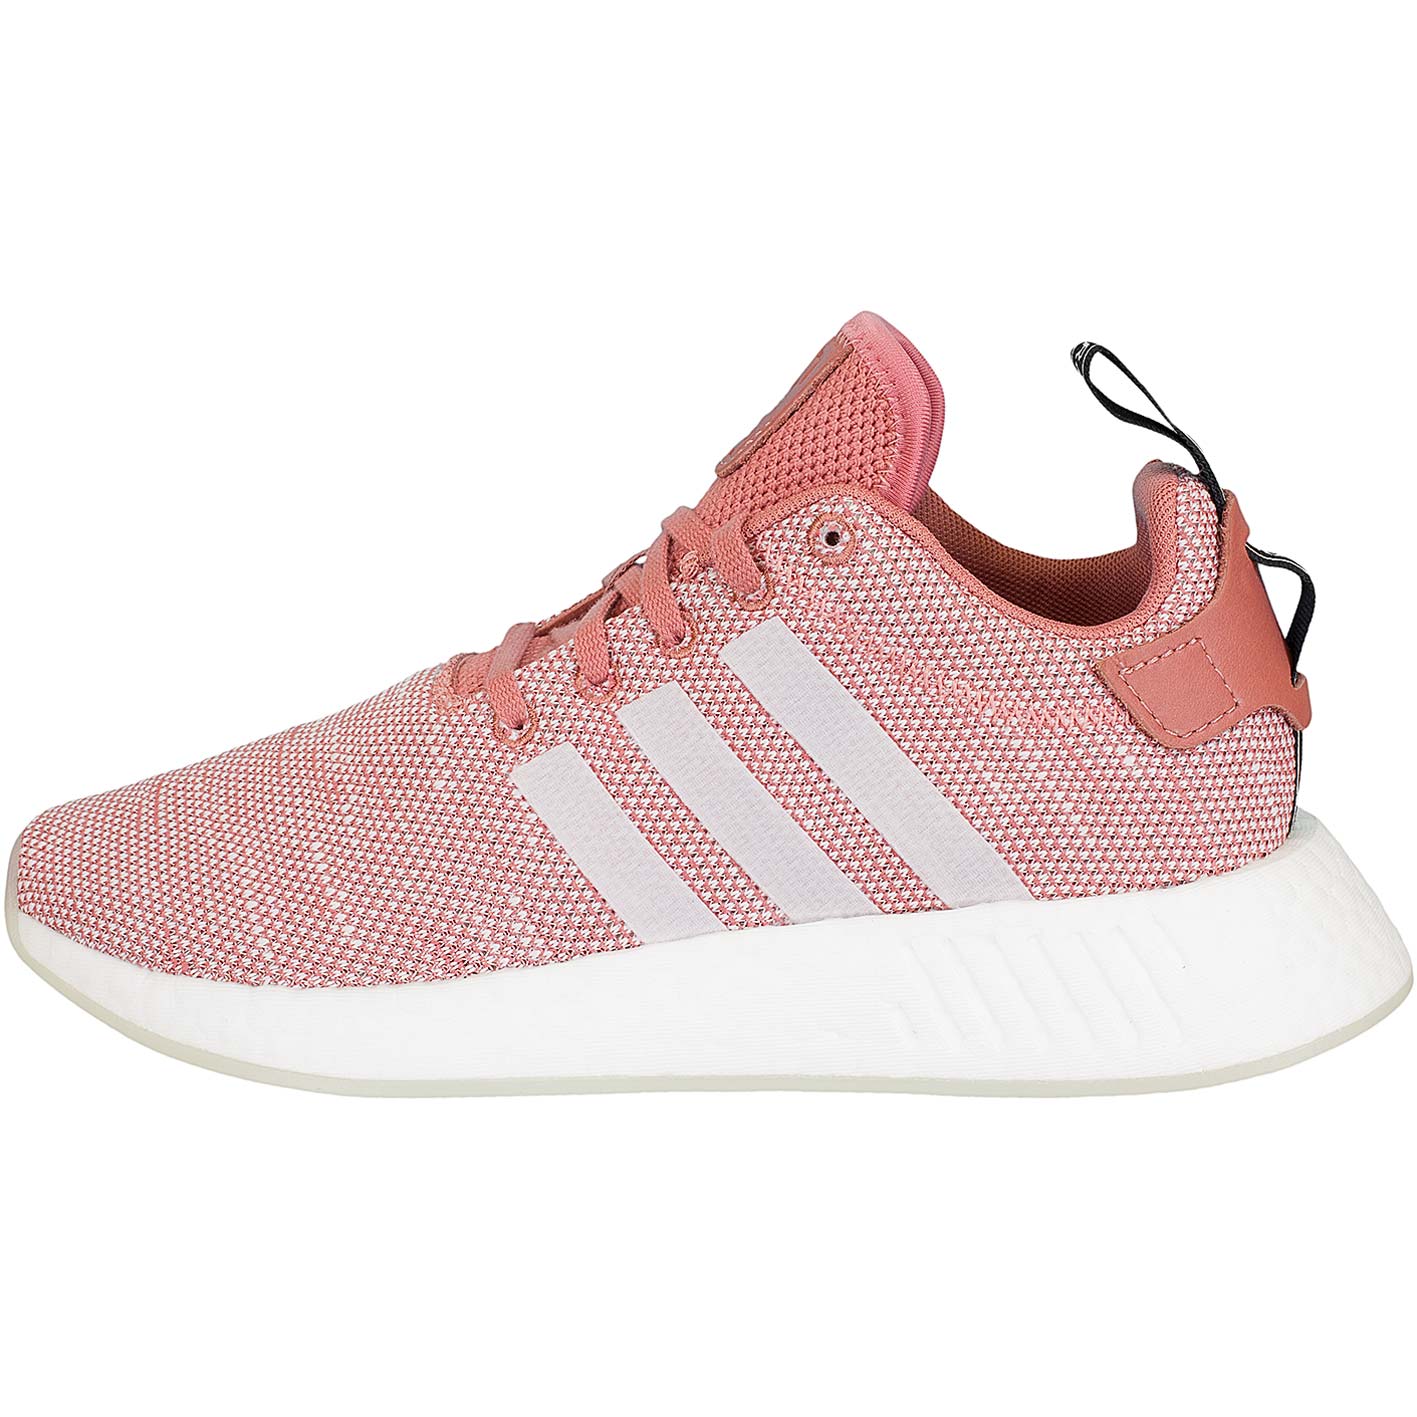 ☆ Adidas Originals Damen Sneaker NMD R2 ash pink - hier bestellen!